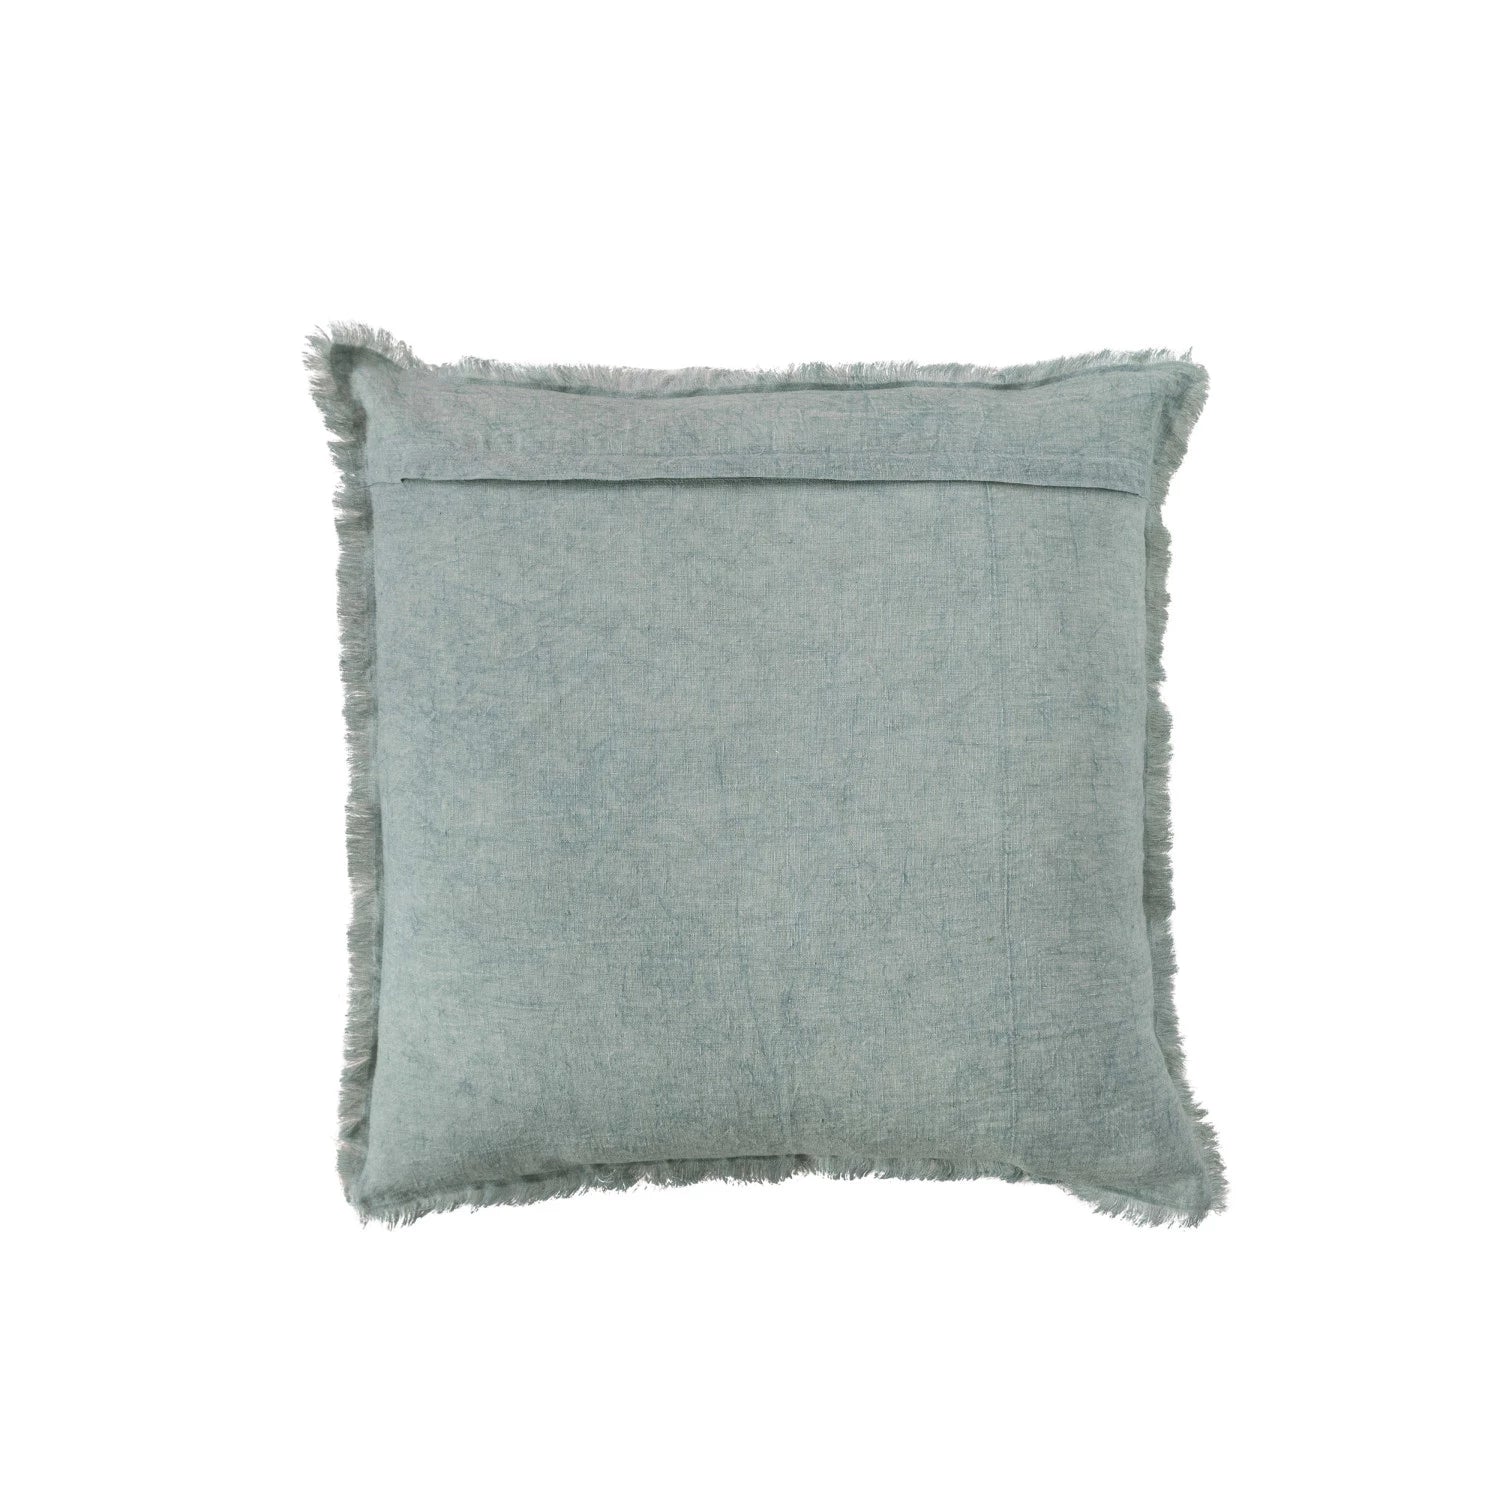 Mint Square Stonewashed Linen Pillow w/ Fringe